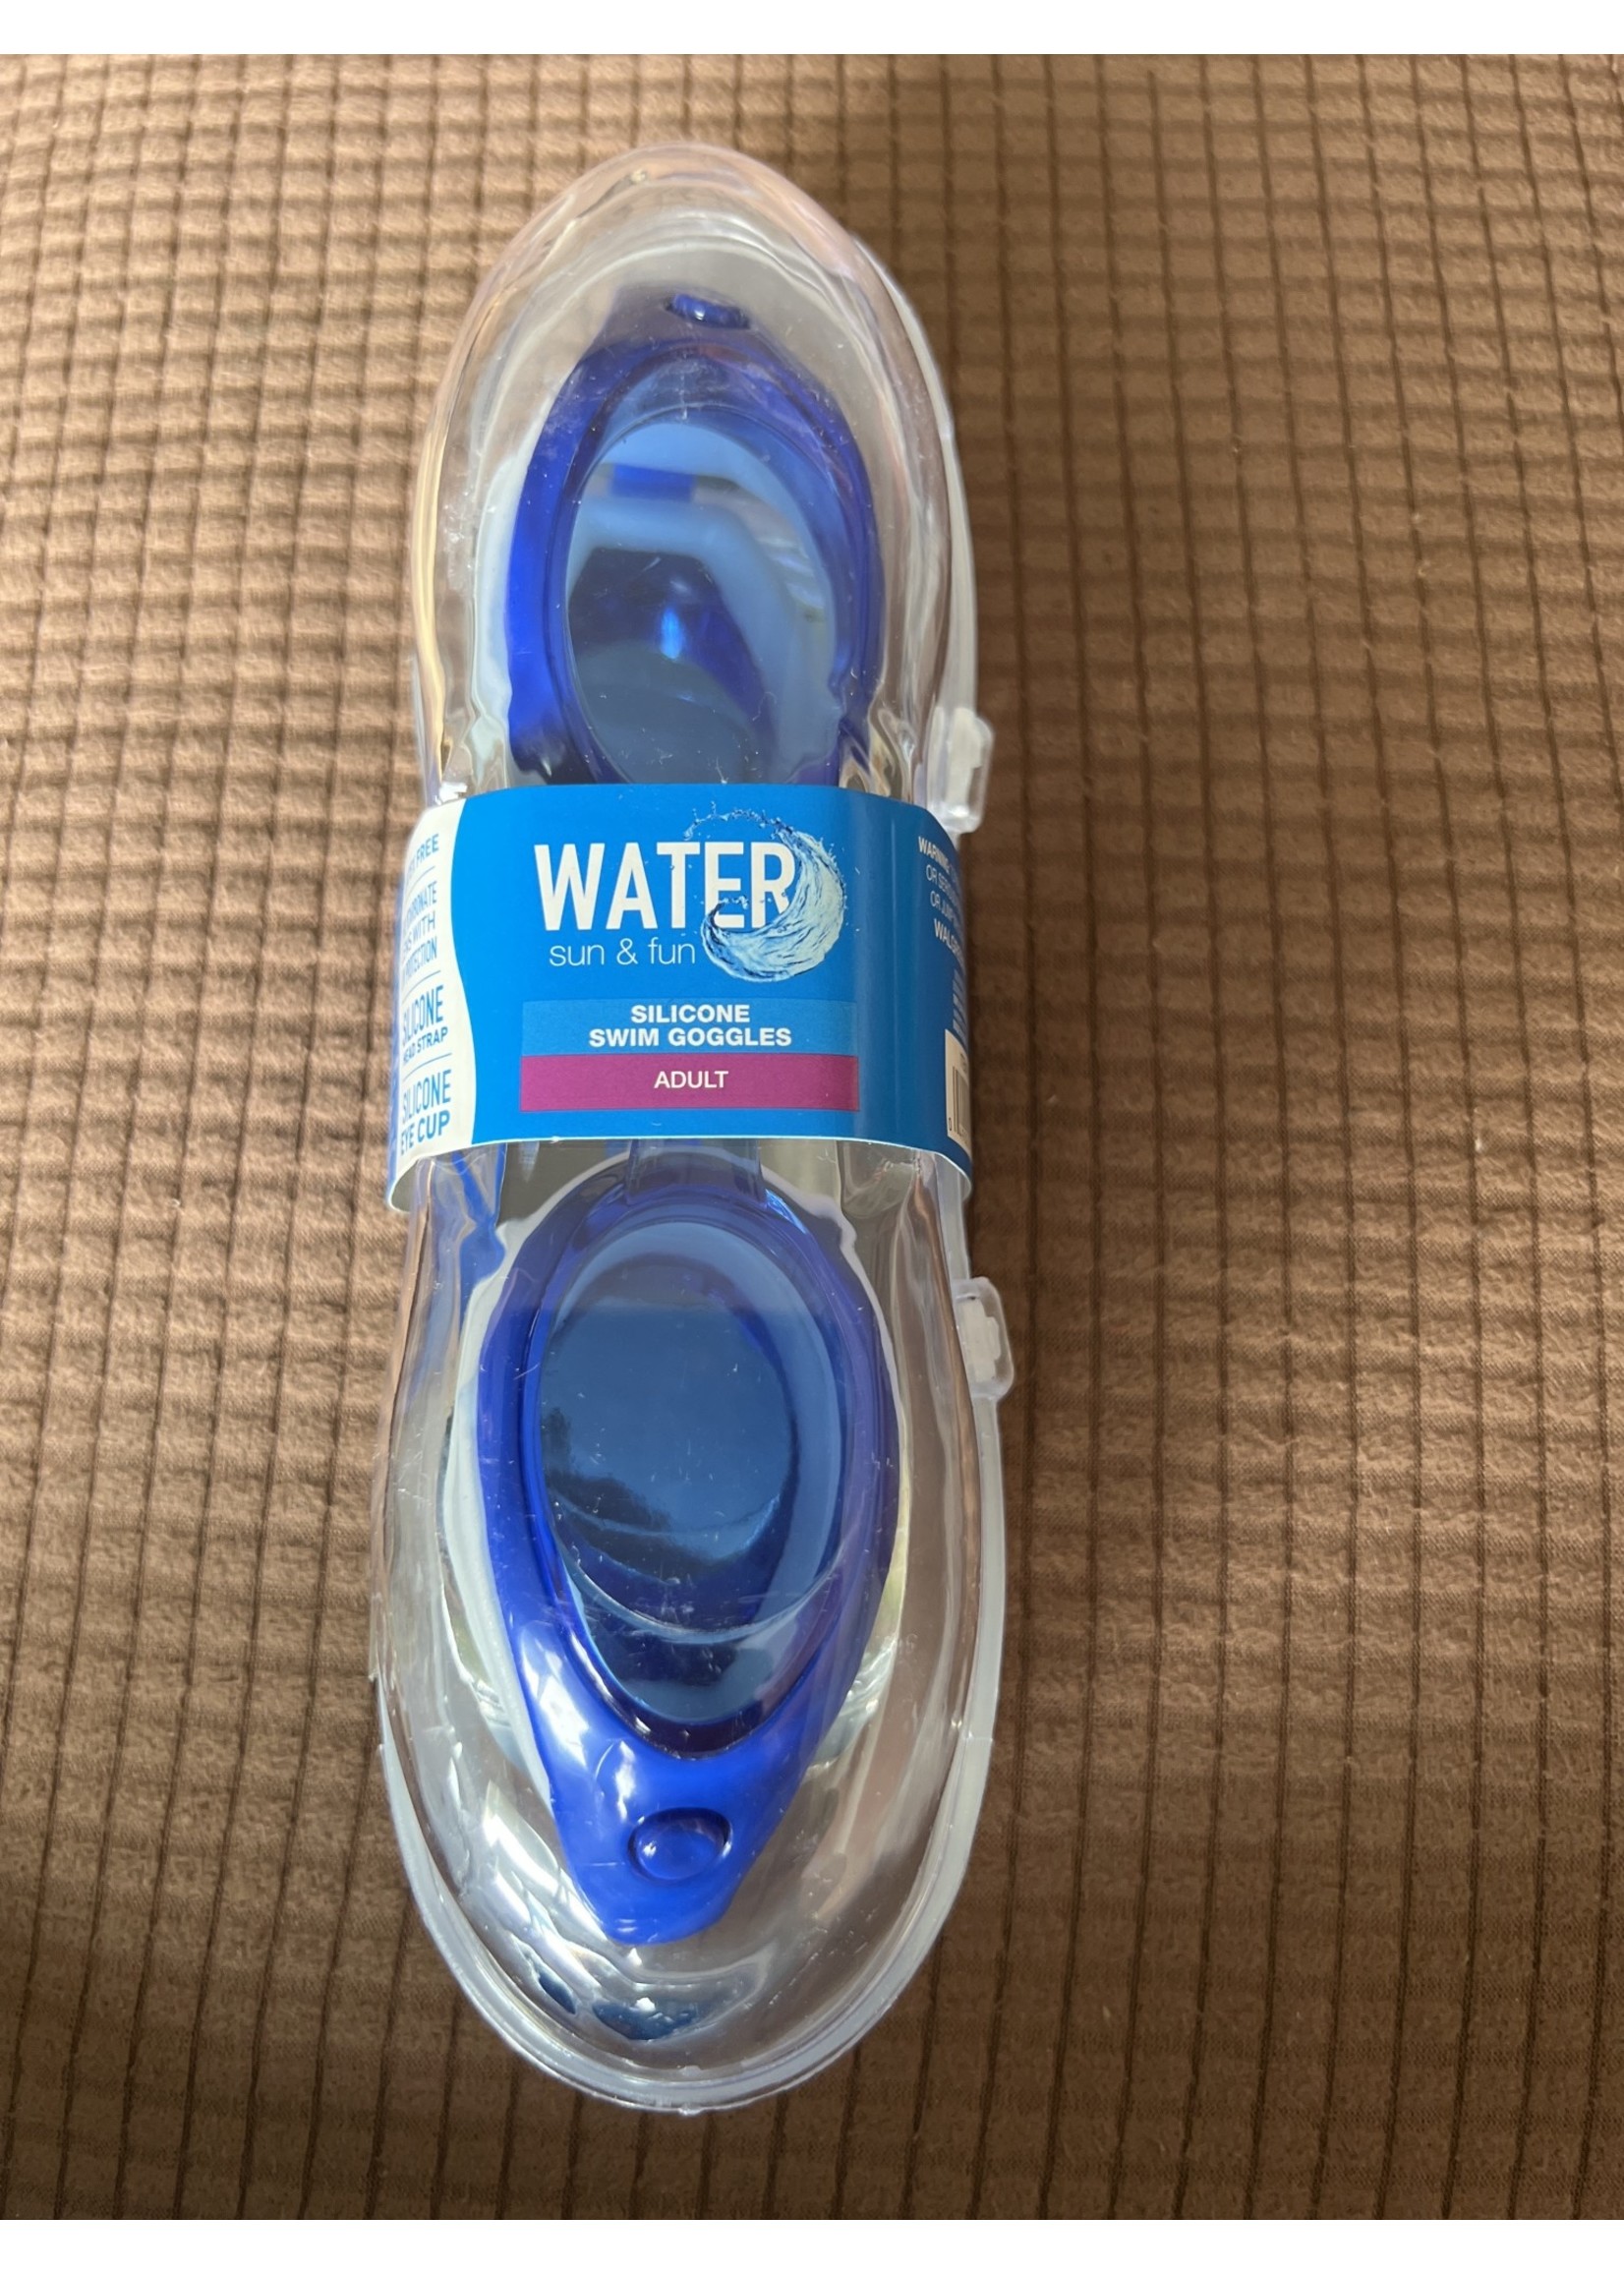 Water Sun & Fun - Silicone Swim Goggles Adult blue